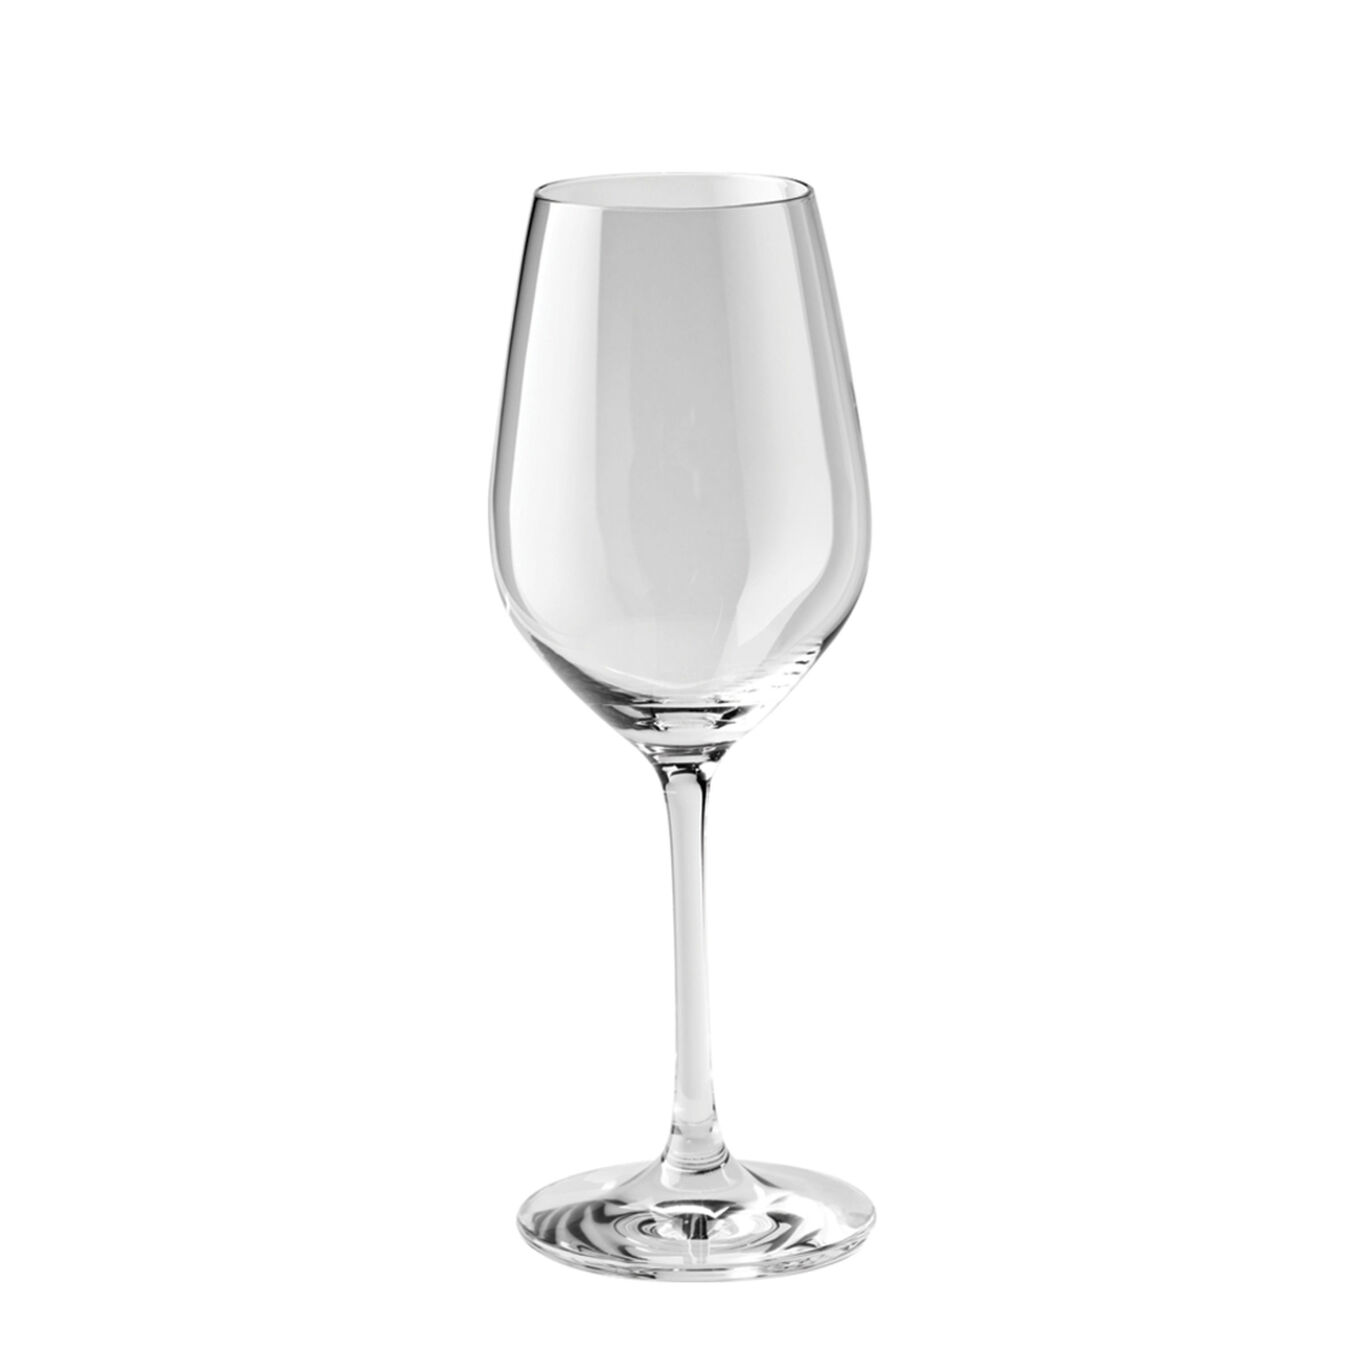 White wine glass set, 6 Piece | transparent,,large 1